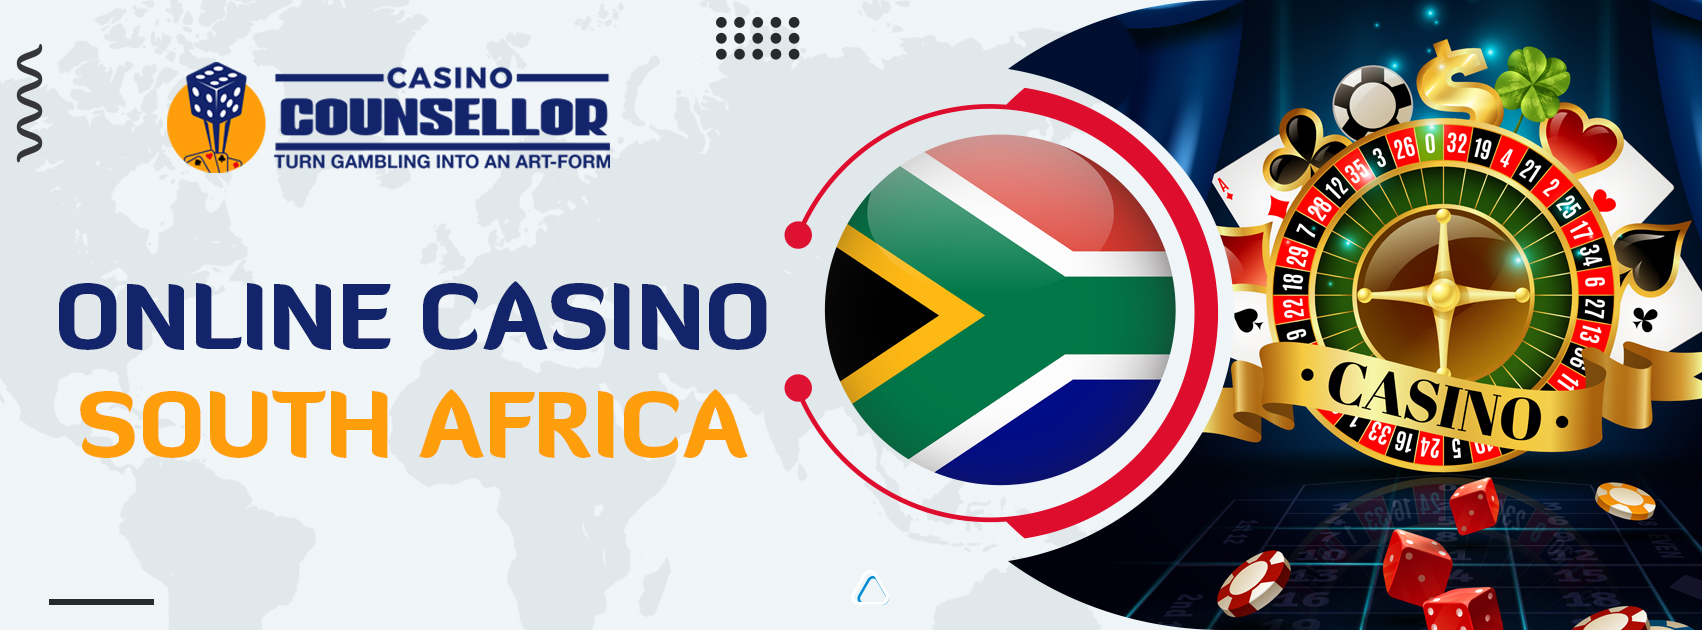 online casino South Africa, best online casino south africa, south african online casinos list